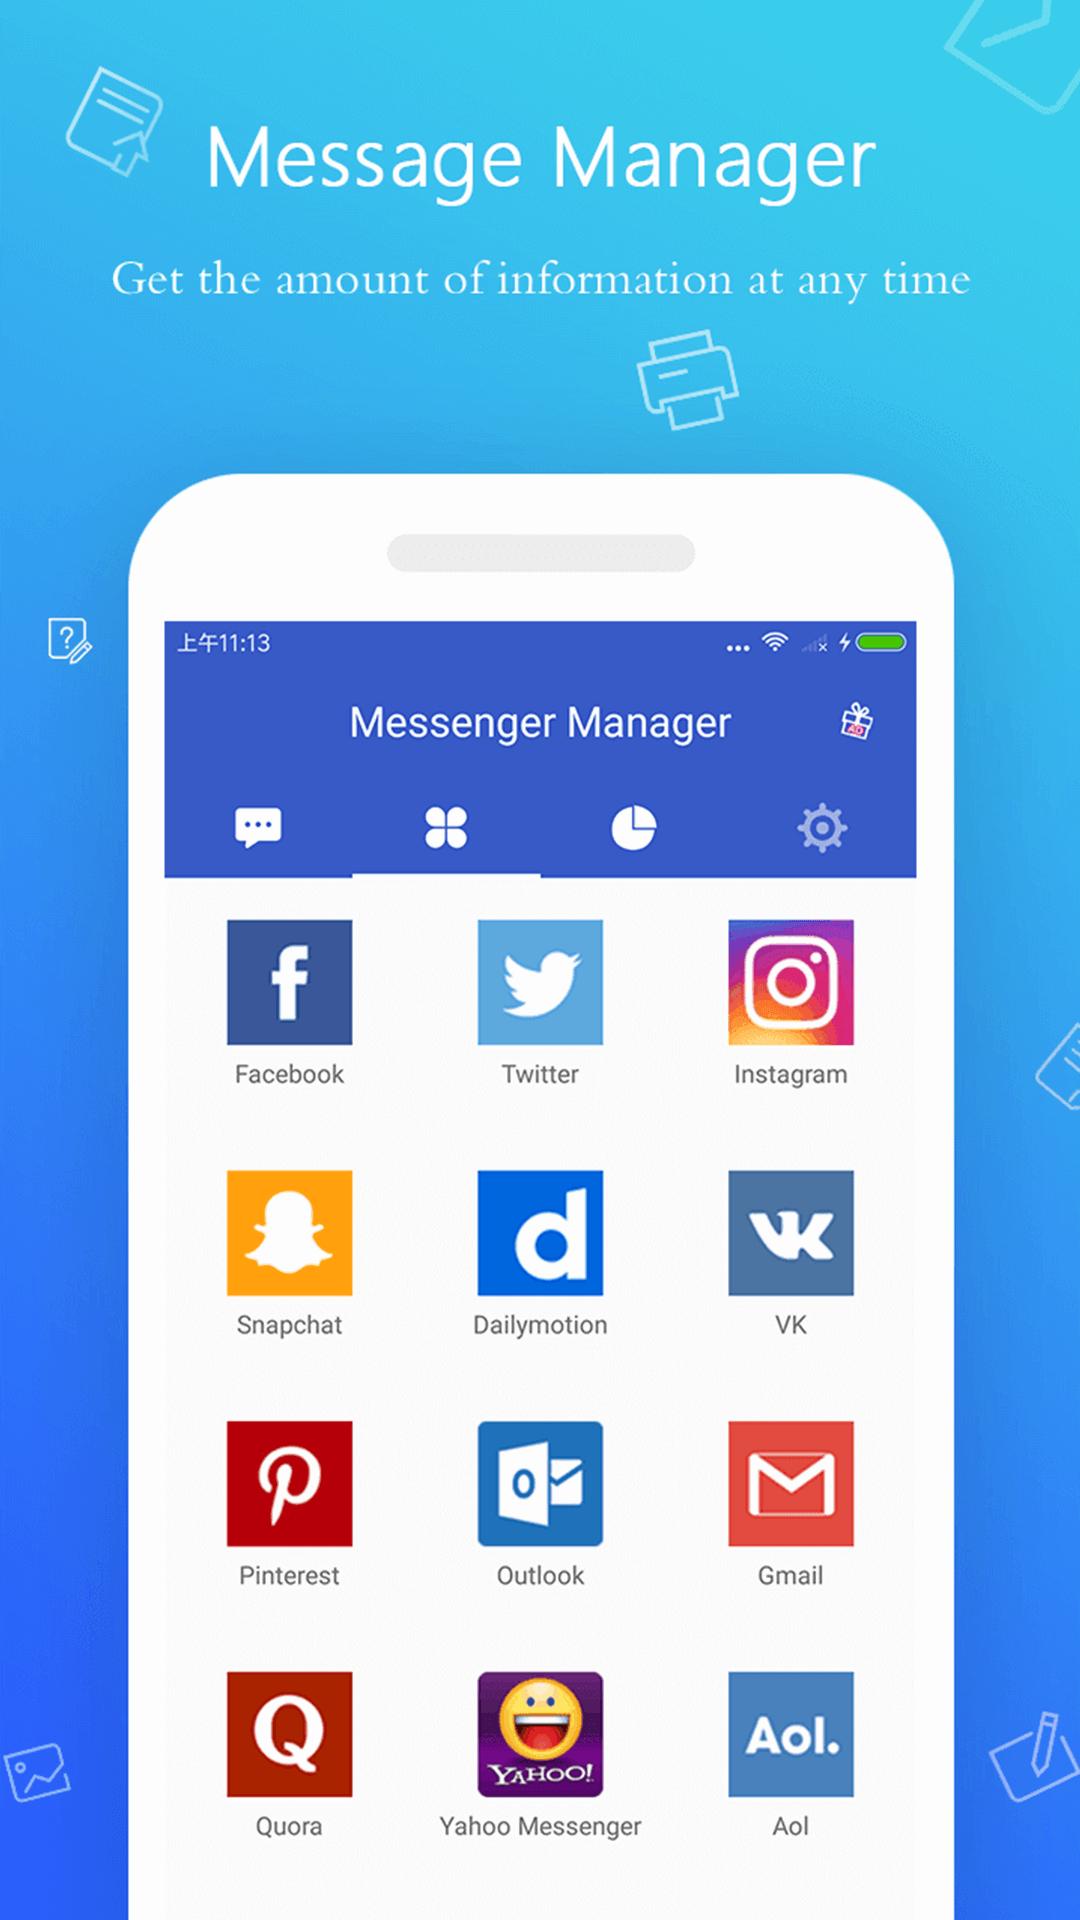 The Messenger андроид. Мессагес. WK мессенджер. Messages with Manager in Instagram. Русский мессенджер для андроид